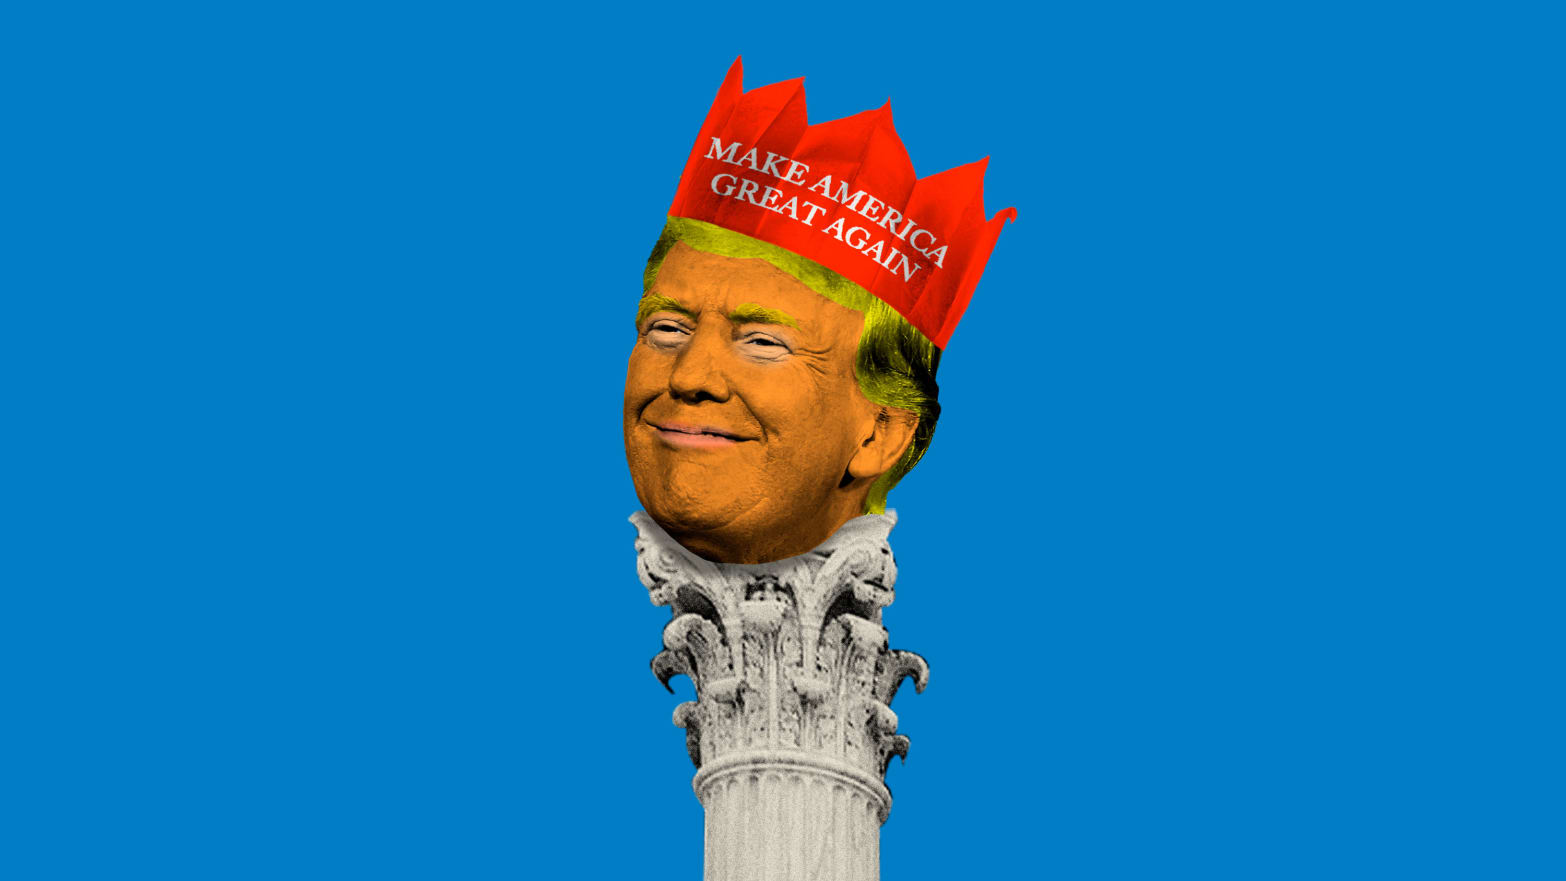 Photo illustration of Donald Trump wearing a MAGA crown on a corinthian column.